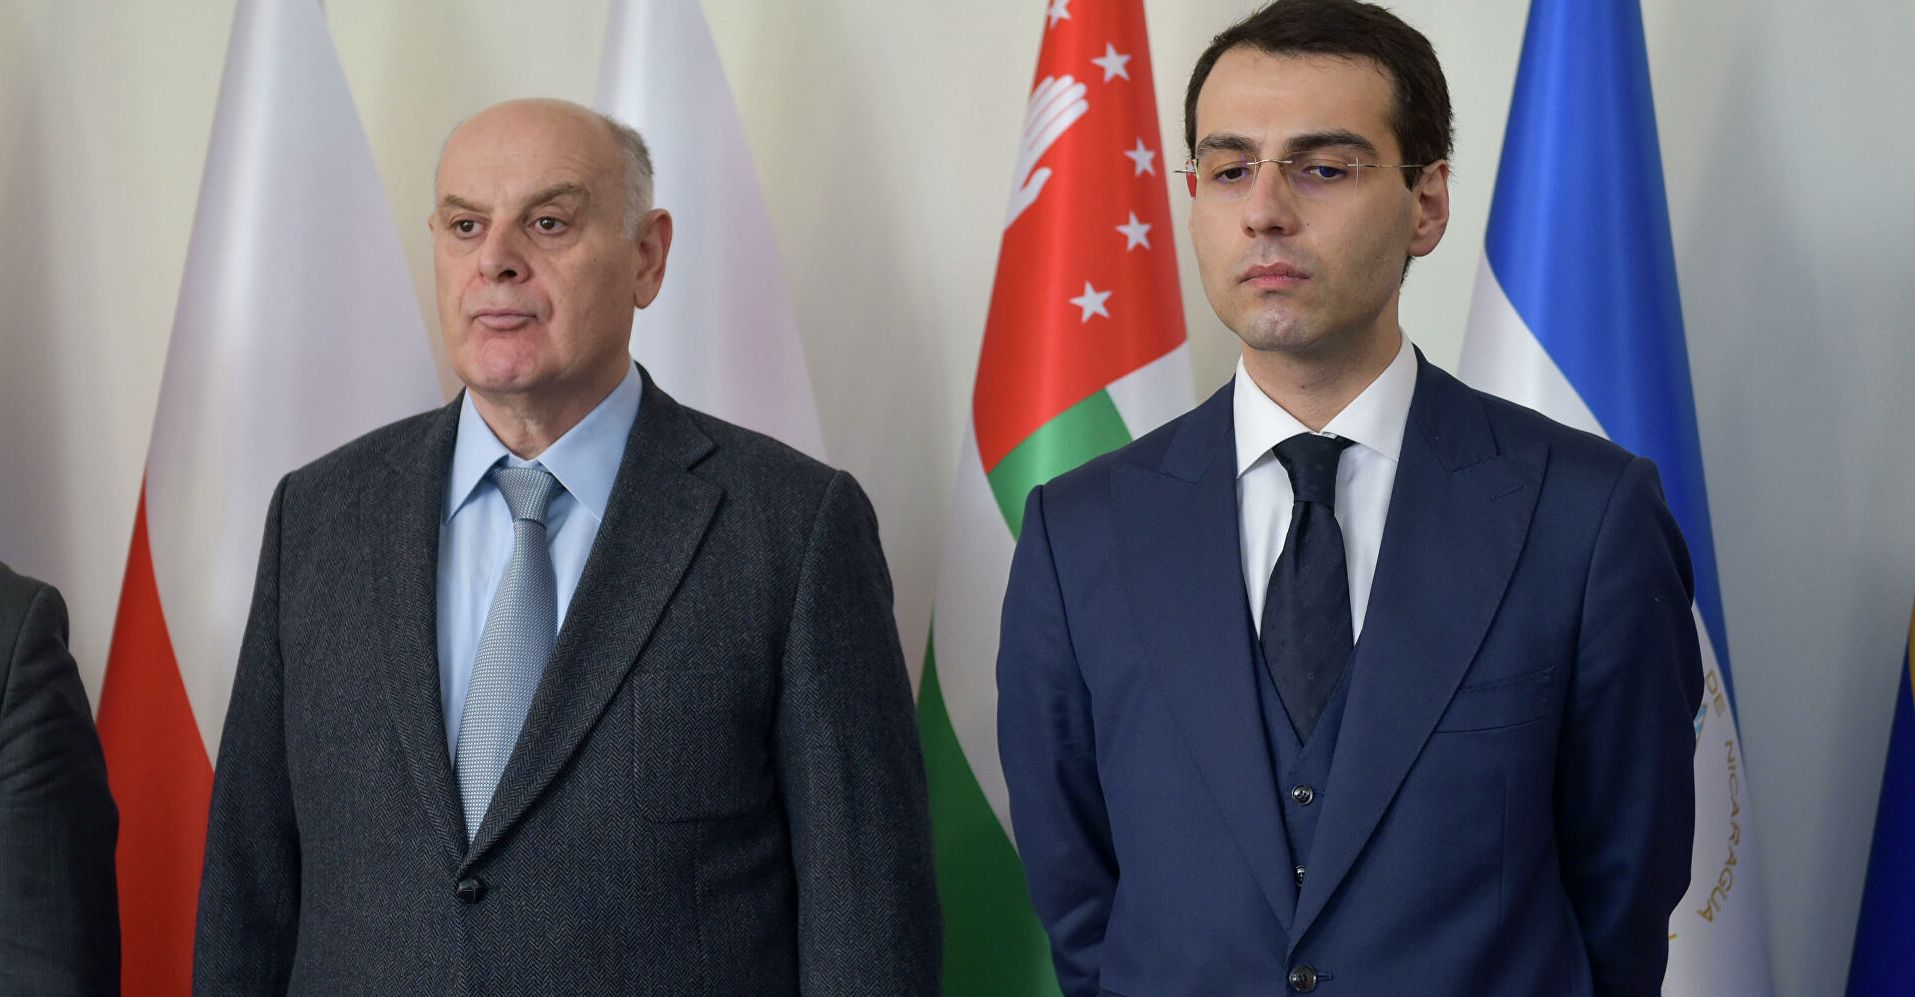 The President of Abkhazia Aslan Bzhania and the new Minister Inal Ardzinba